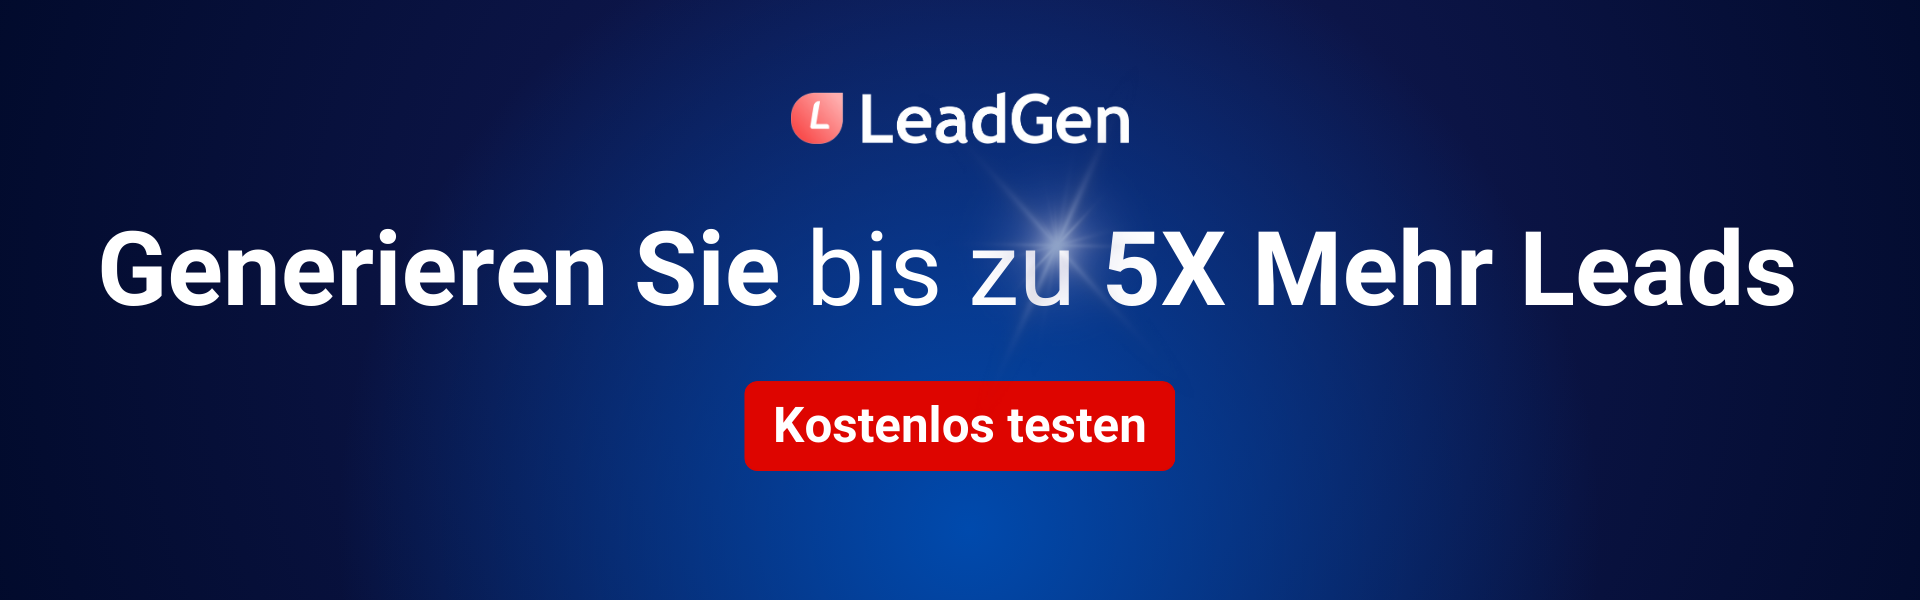 Obtenha 5X mais leads - LeadGen App banner 1